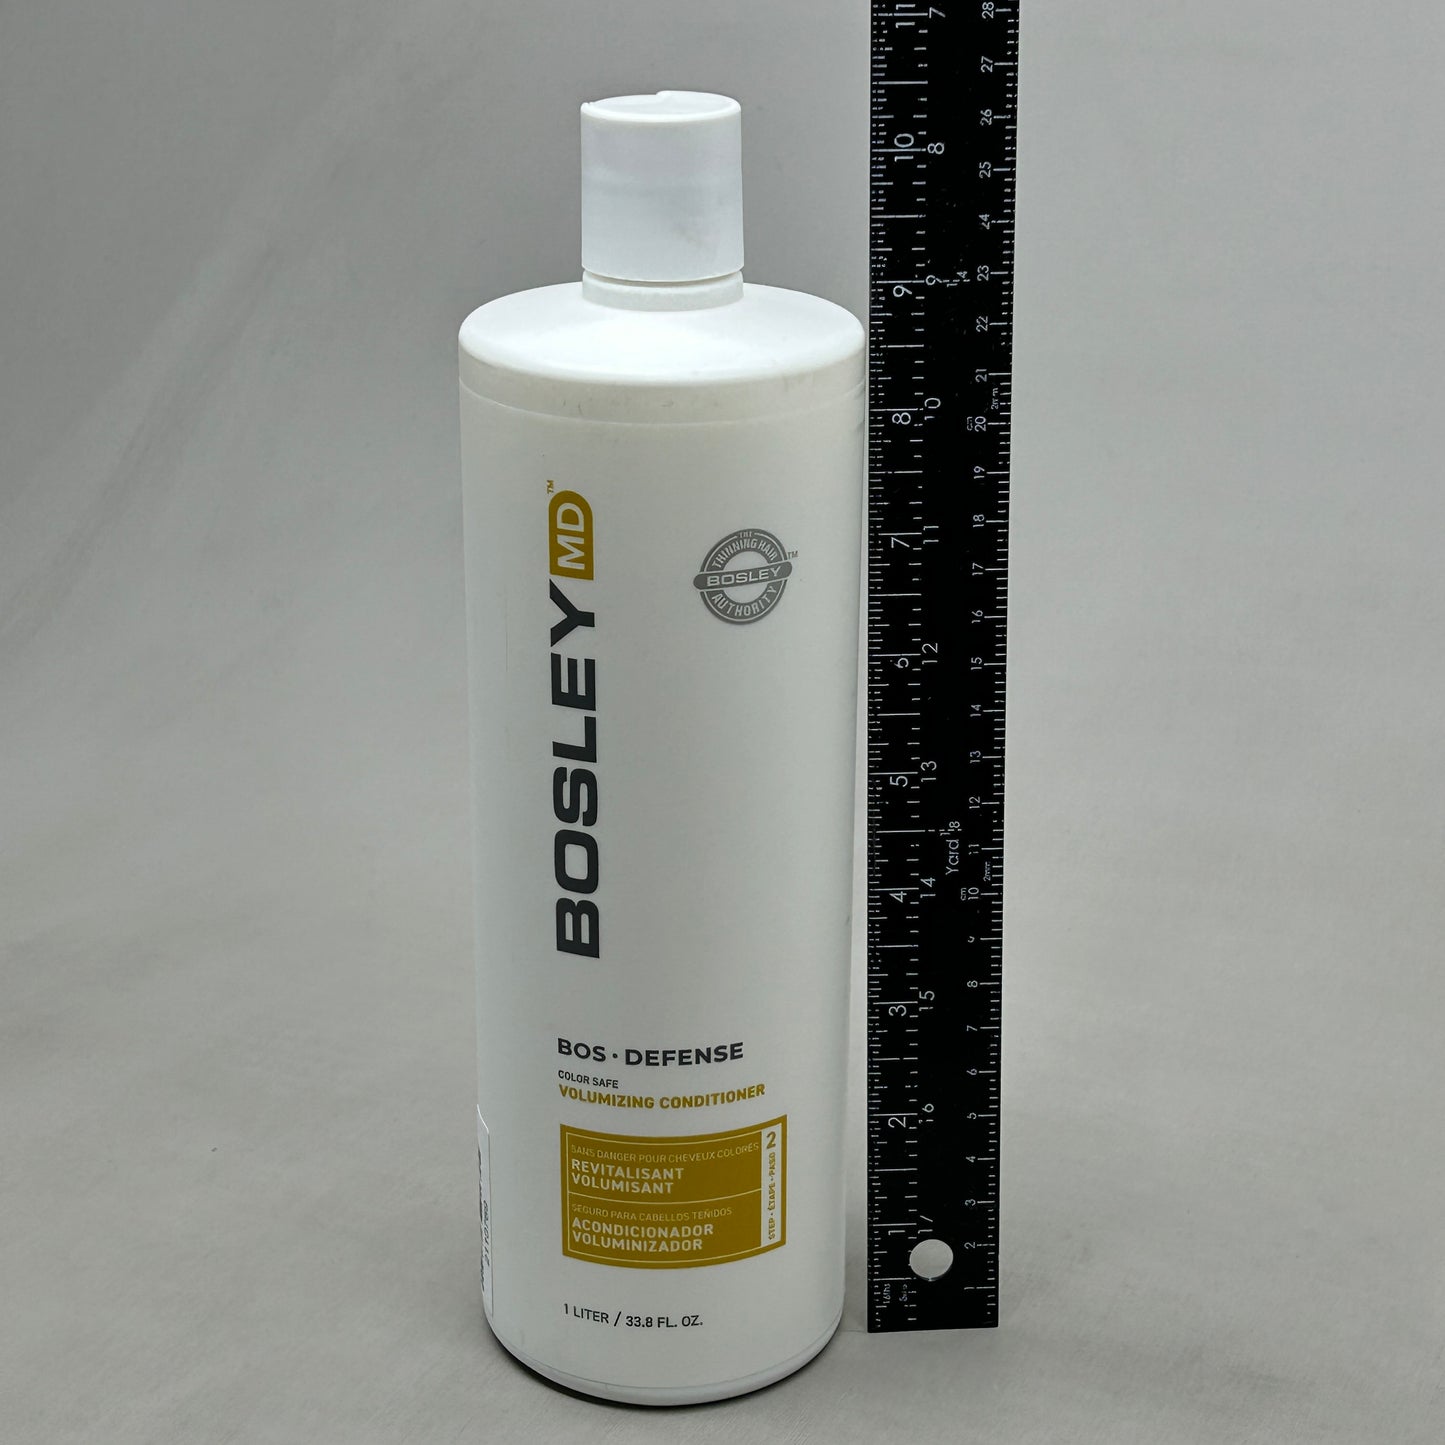 BOSLEY MD BOS Defense Color Safe Volumizing Conditioner 33.8 fl oz (New)